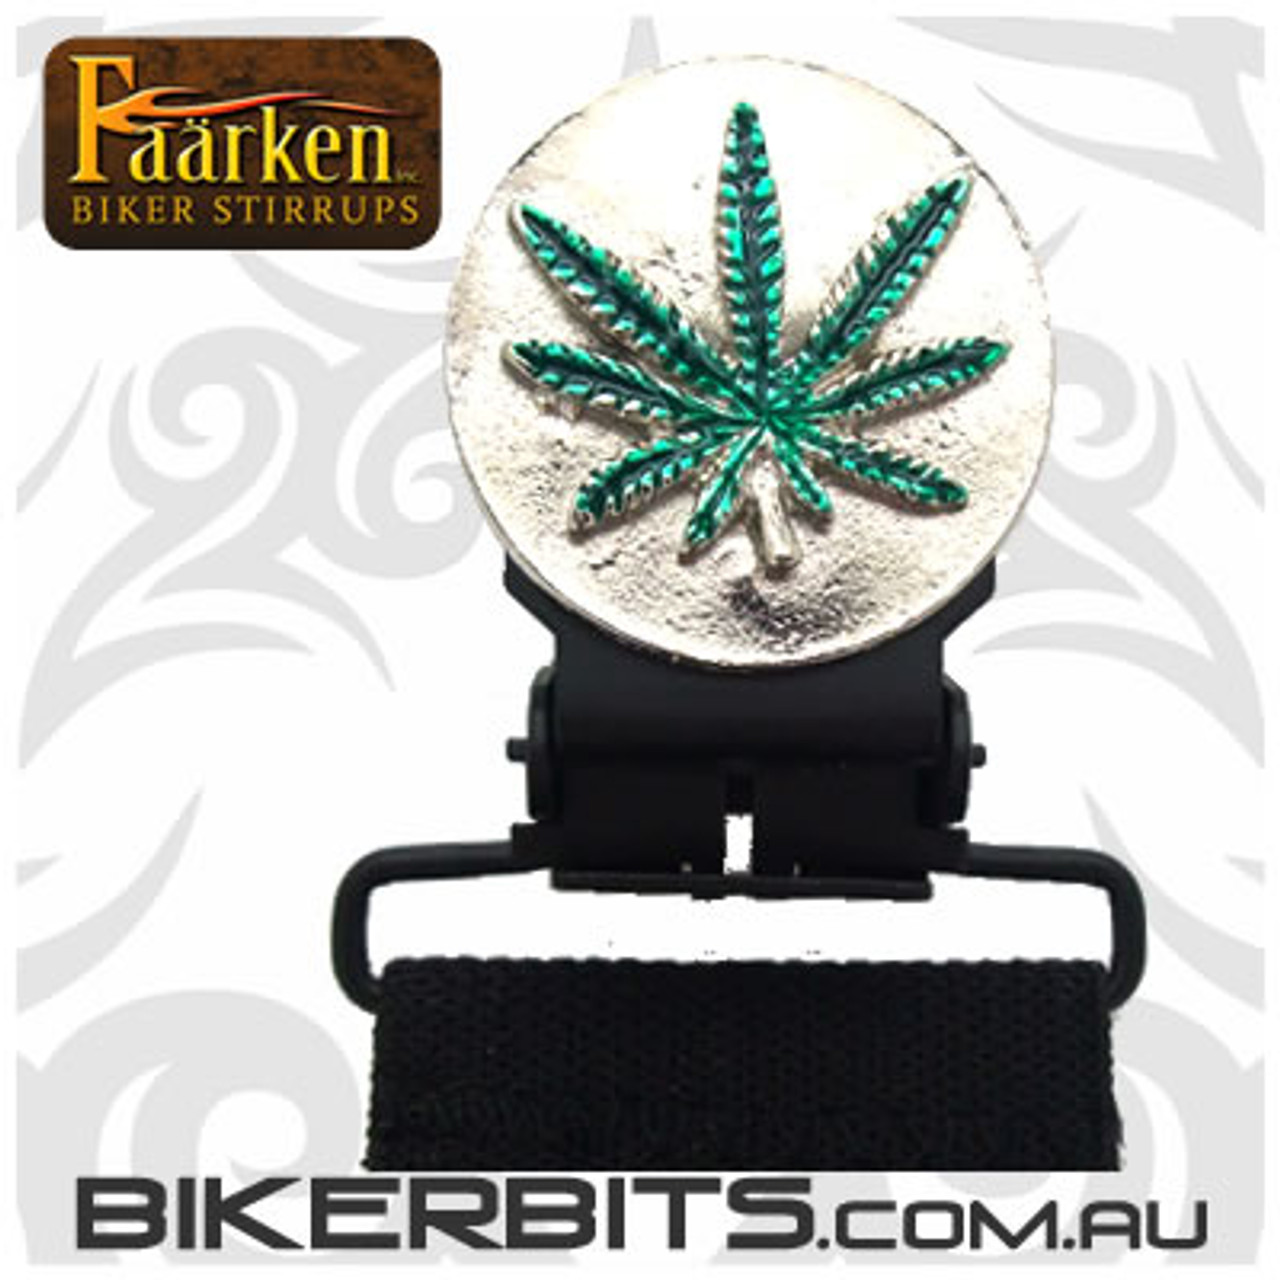 Faarken Biker Stirrups - Marijuana Leaf - Silver